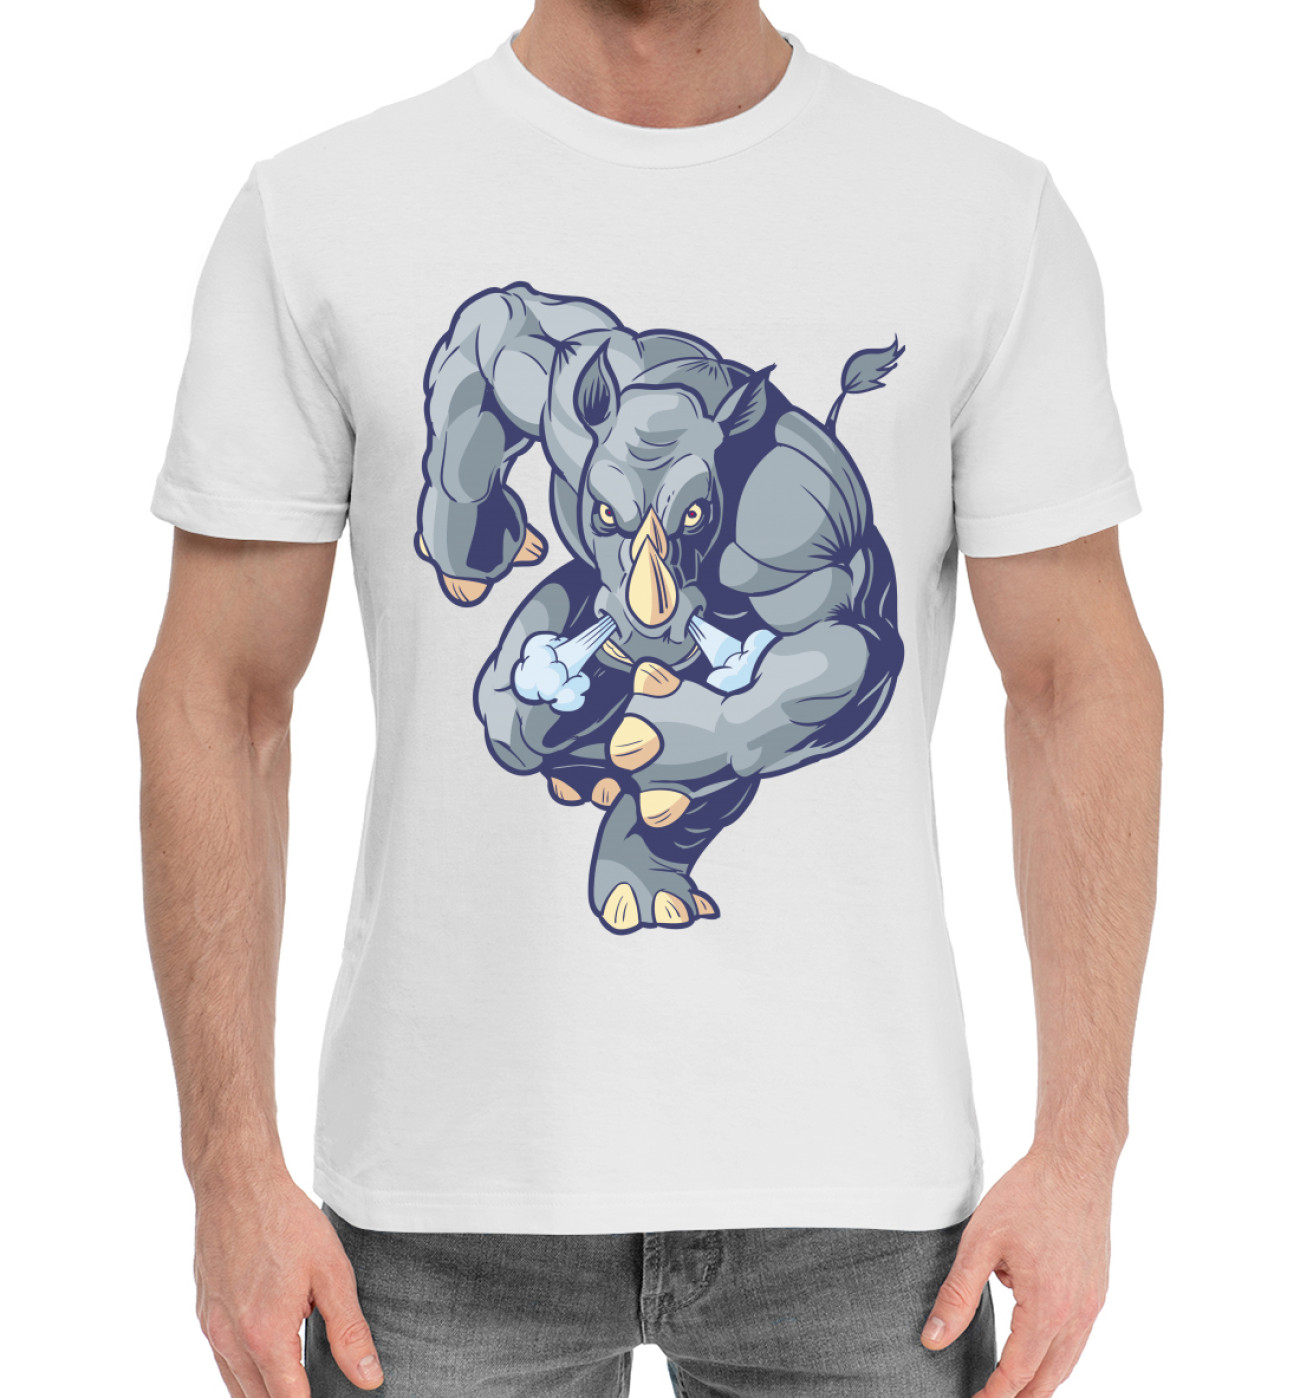 Мужская Хлопковая футболка Носорог, артикул: ZIR-796017-hfu-2